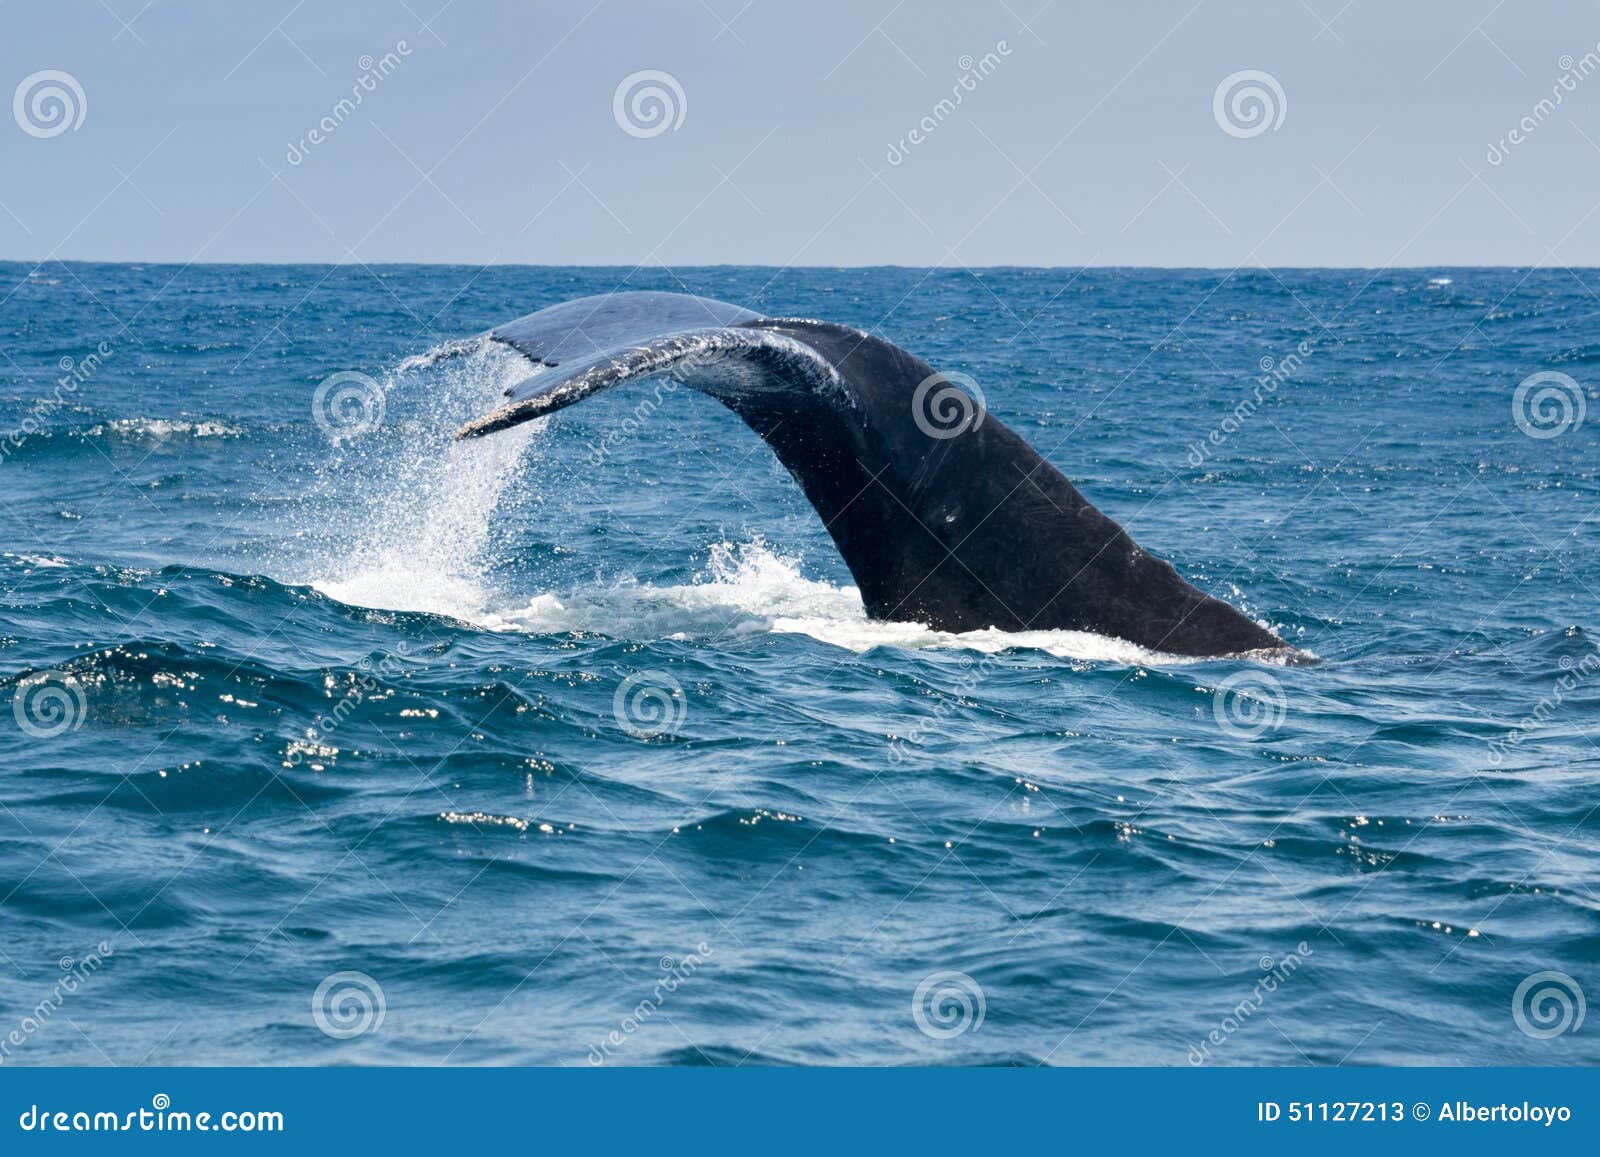 humpback whale in puerto lopez, ecuador